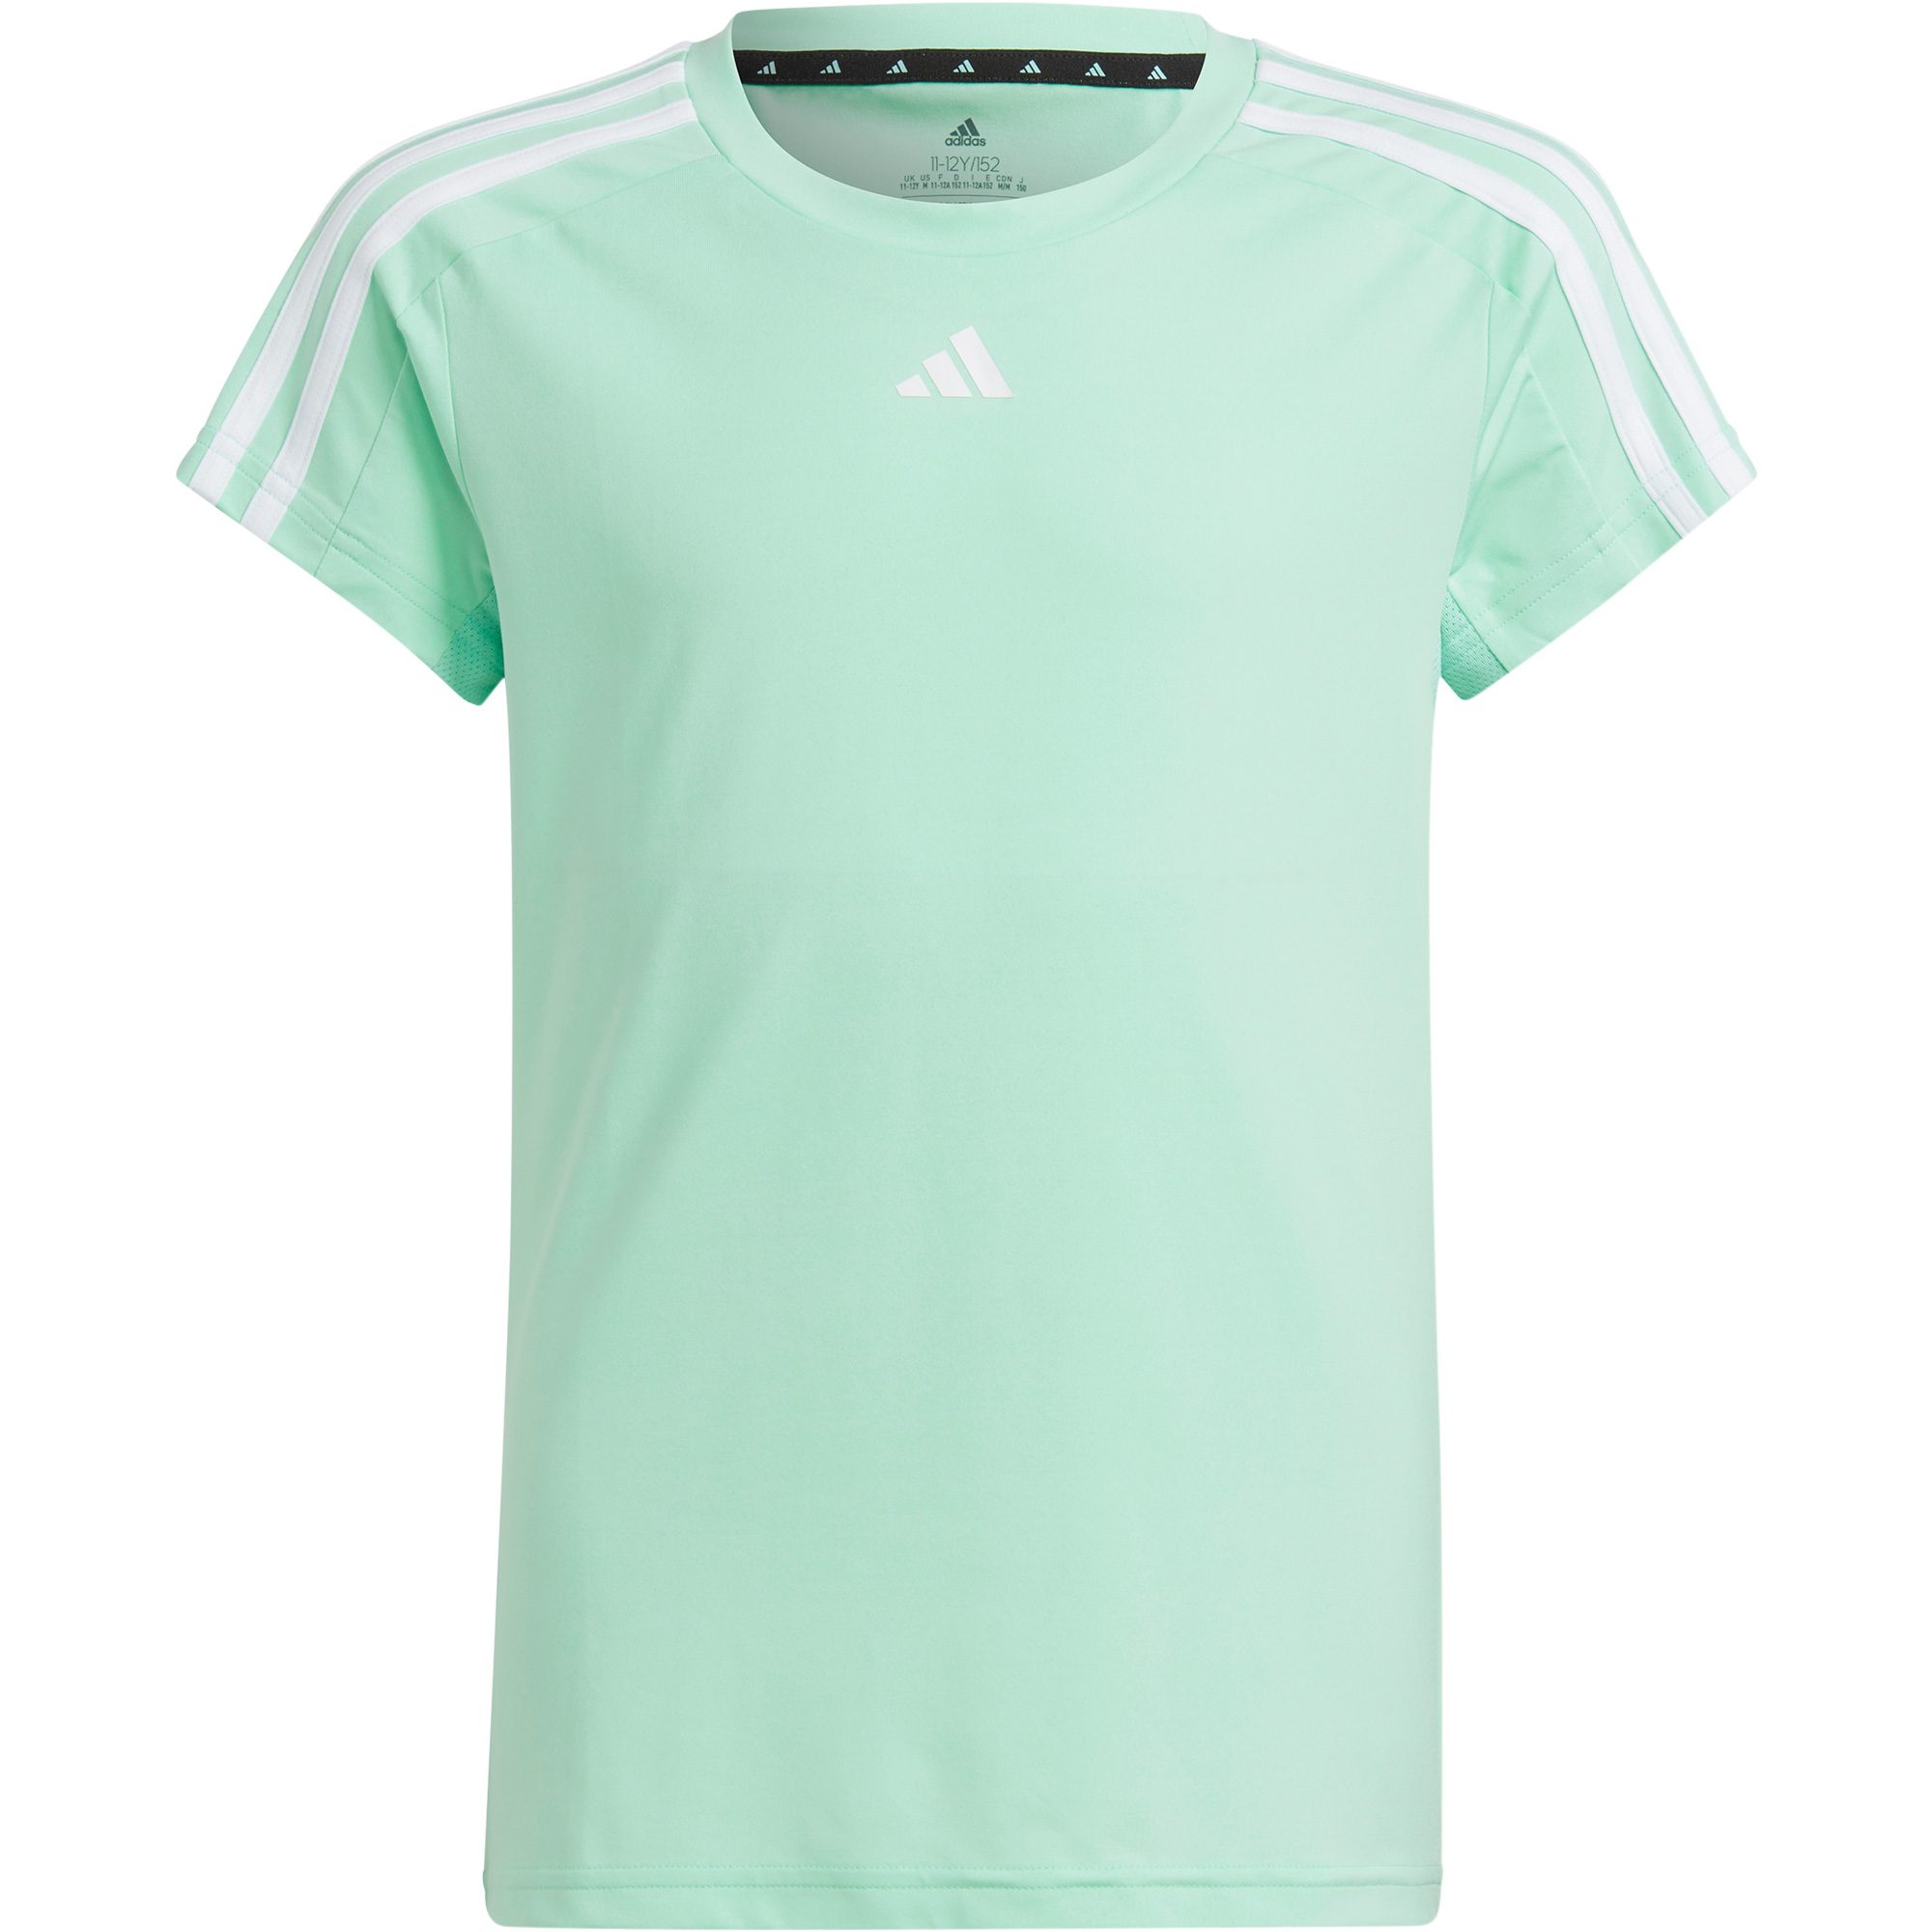 adidas - Train Essentials Bittl Sport Aeroready easy Shop Girls at green T-Shirt 3-Stripes